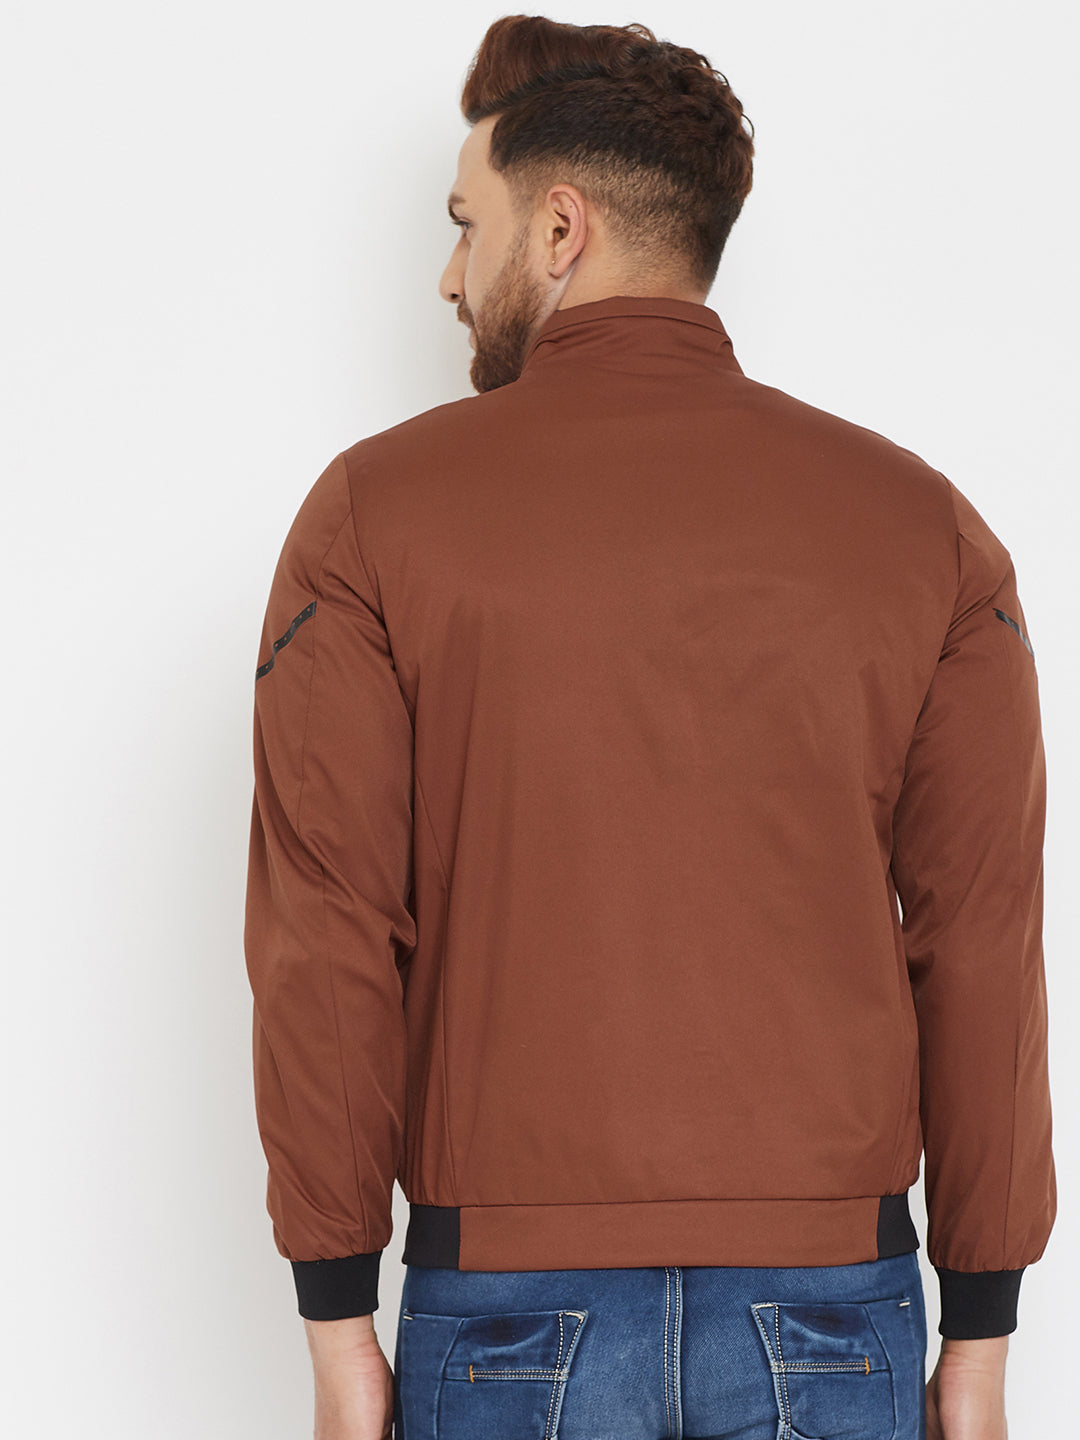 Brown Varsity Jacket - Men Jacket